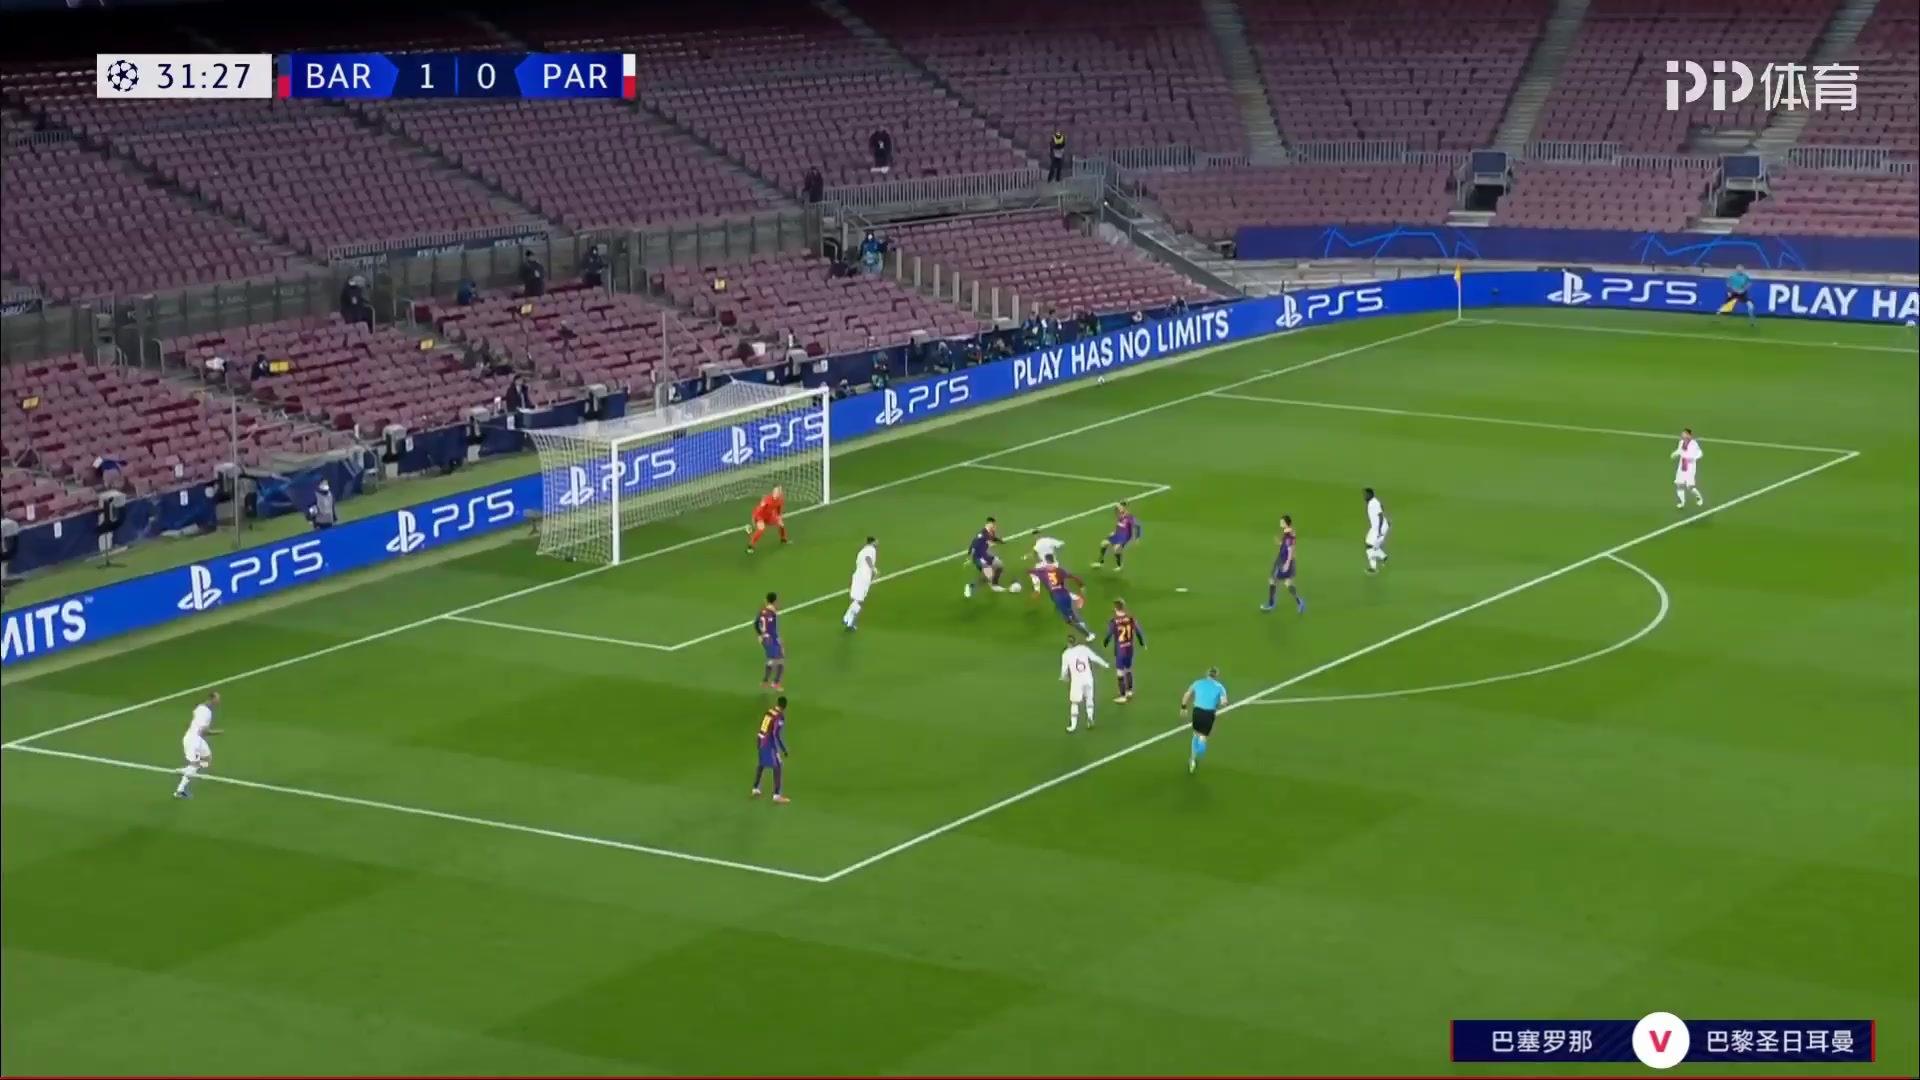 UEFA CL FC Barcelona Vs Paris Saint Germain (PSG) Kylian Mbappe Lottin Goal in 31 min, Score 1:1